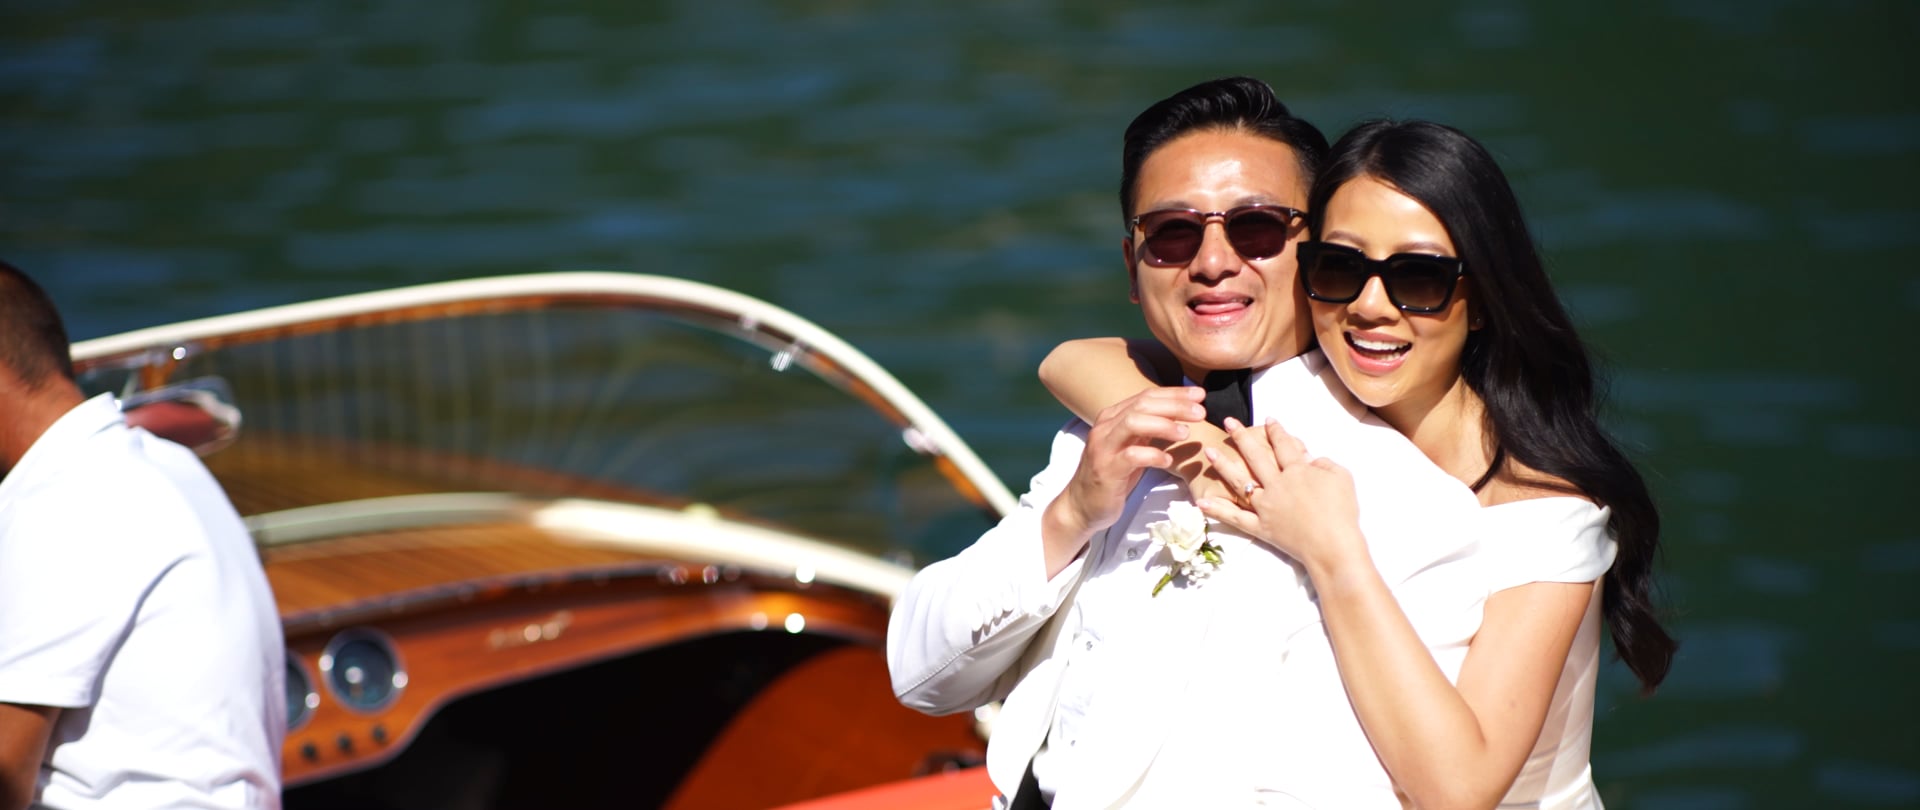 Harvey & Anna Wedding Video Filmed at Lake Como, Italy